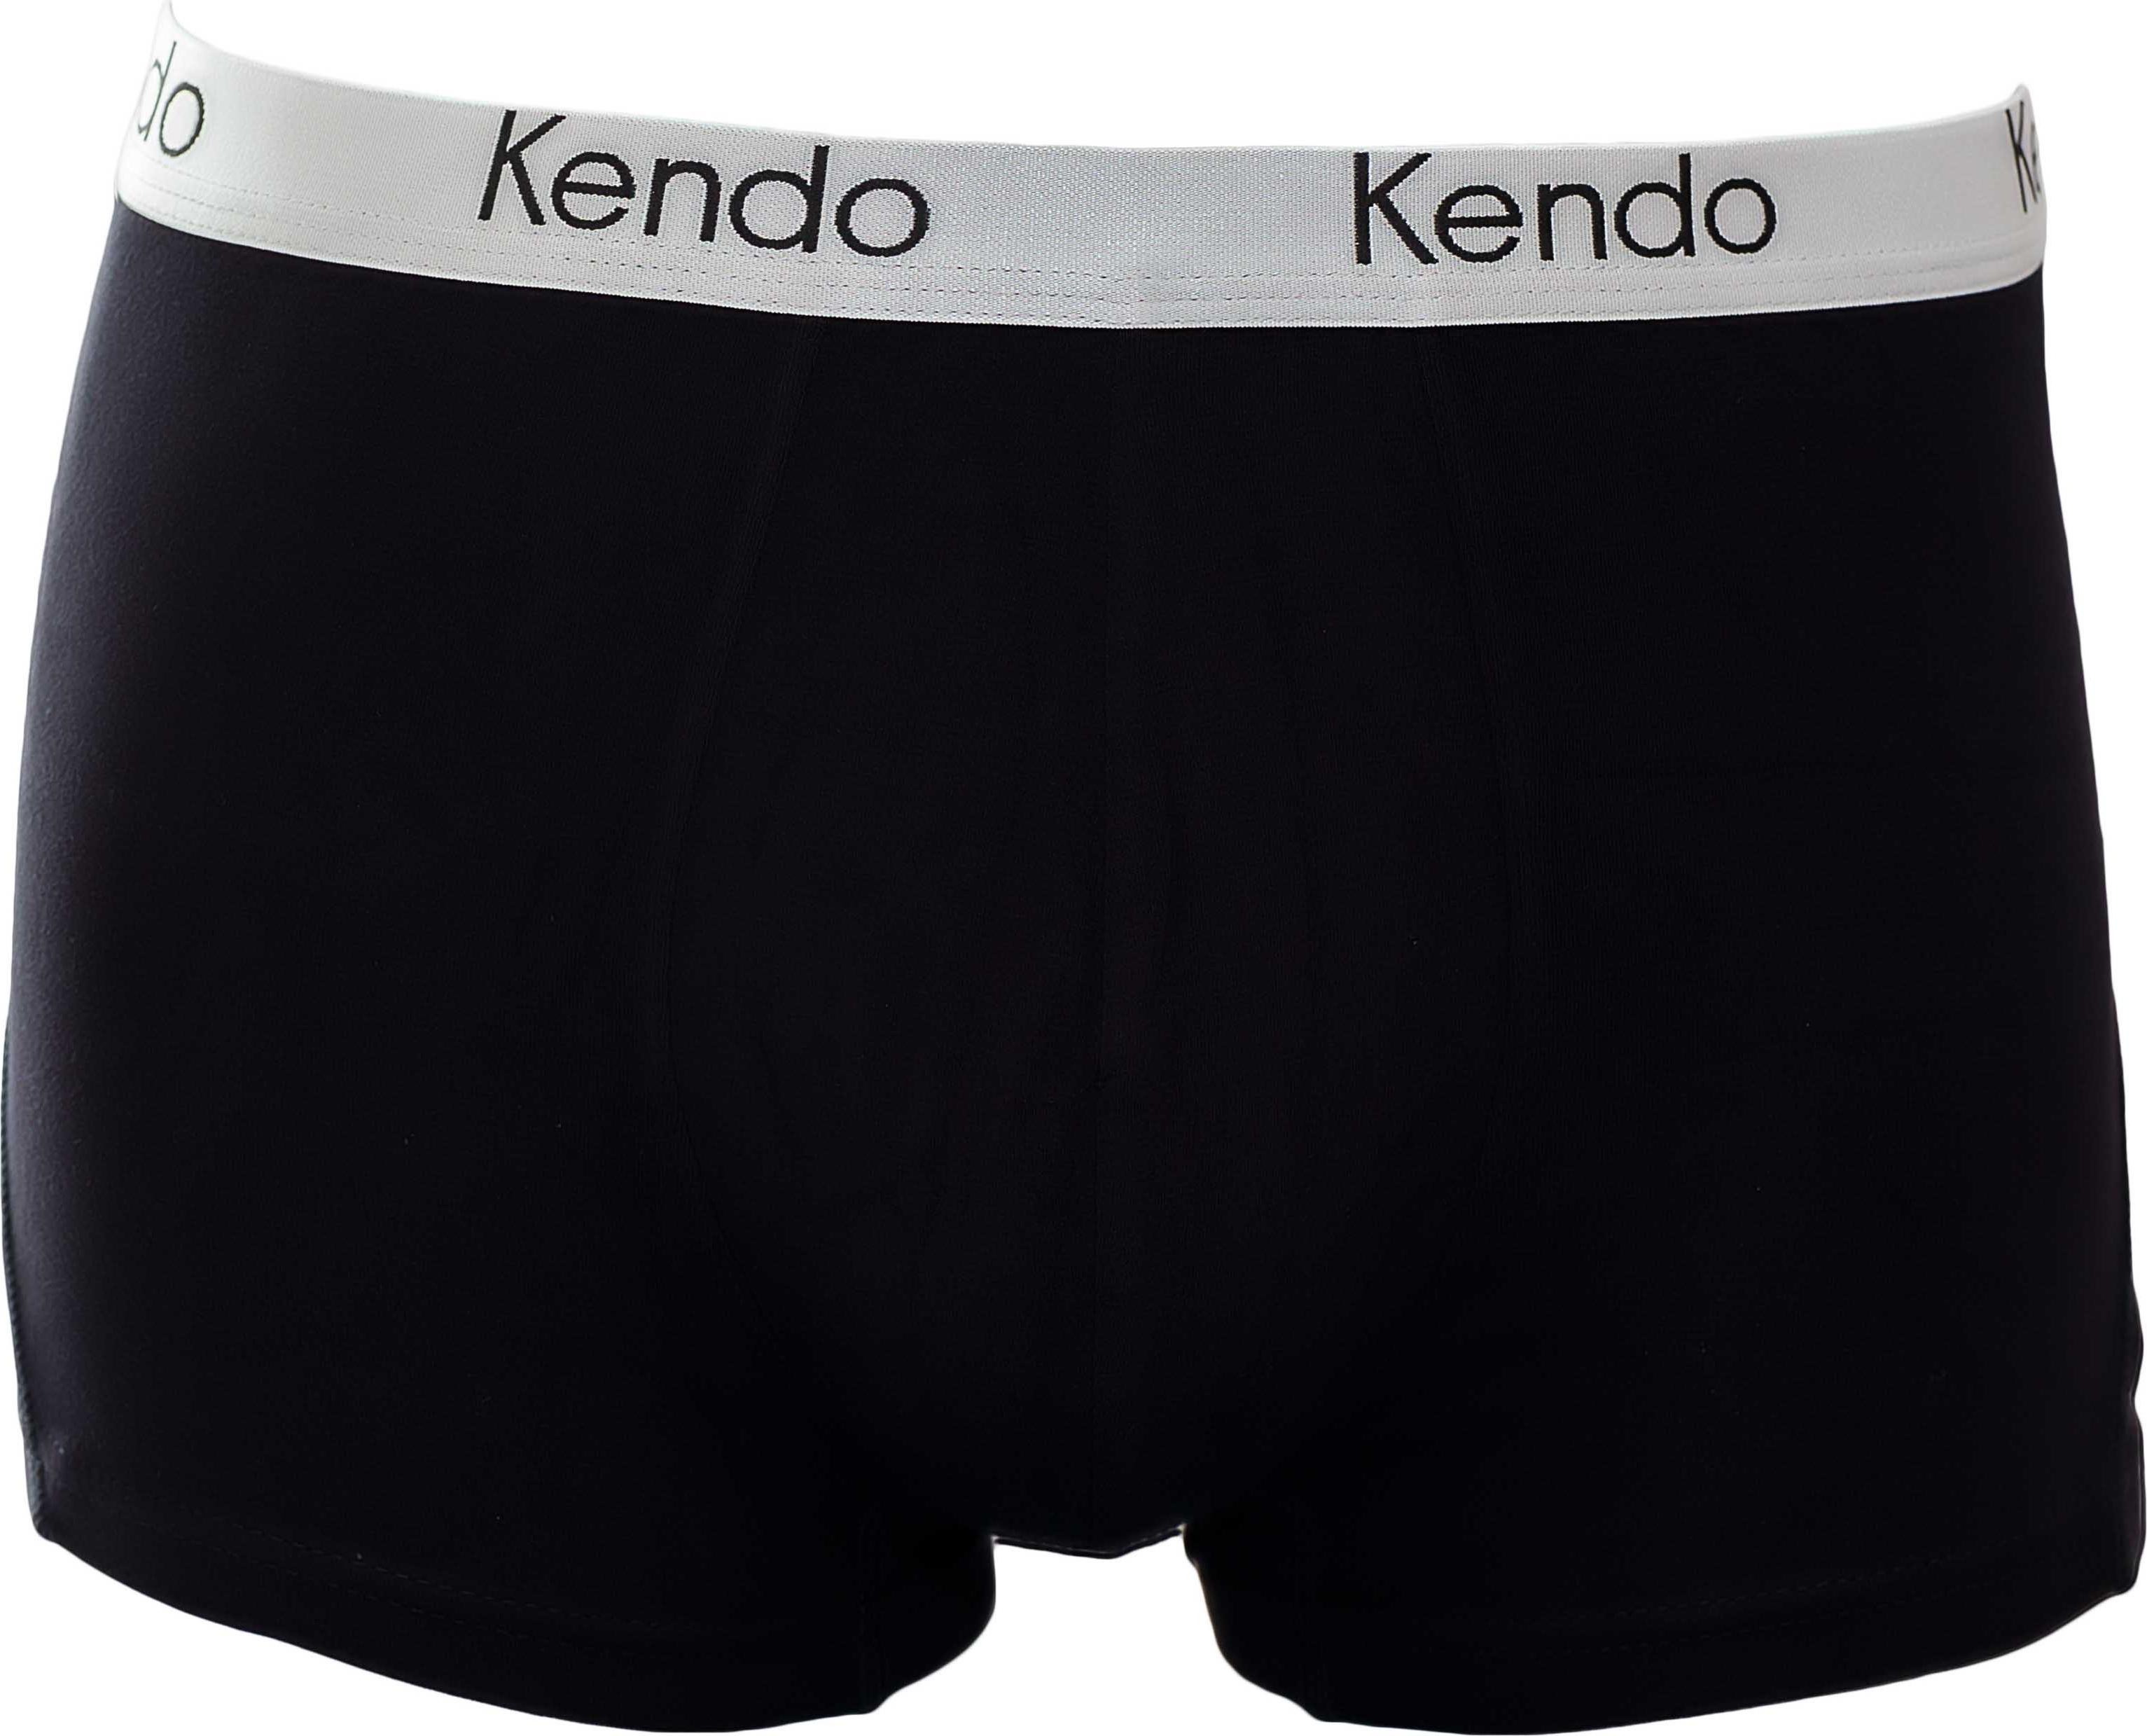 Kendo - Quần lót nam Kendo Boxer Silver Men's Underwear